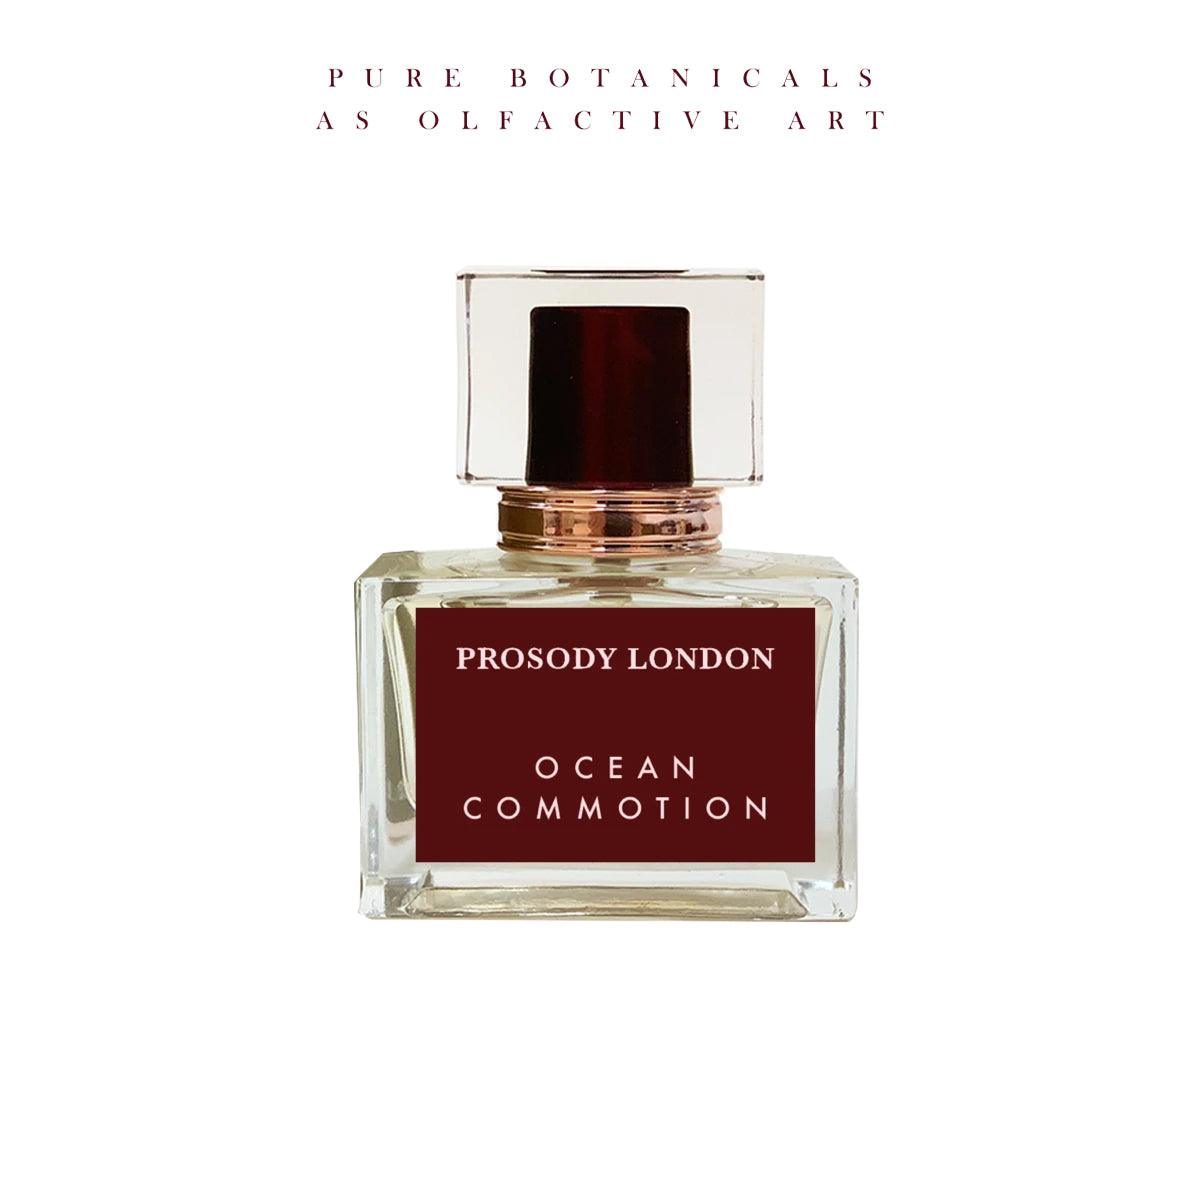 Ocean Commotion by Prosody London at Indigo Perfumery